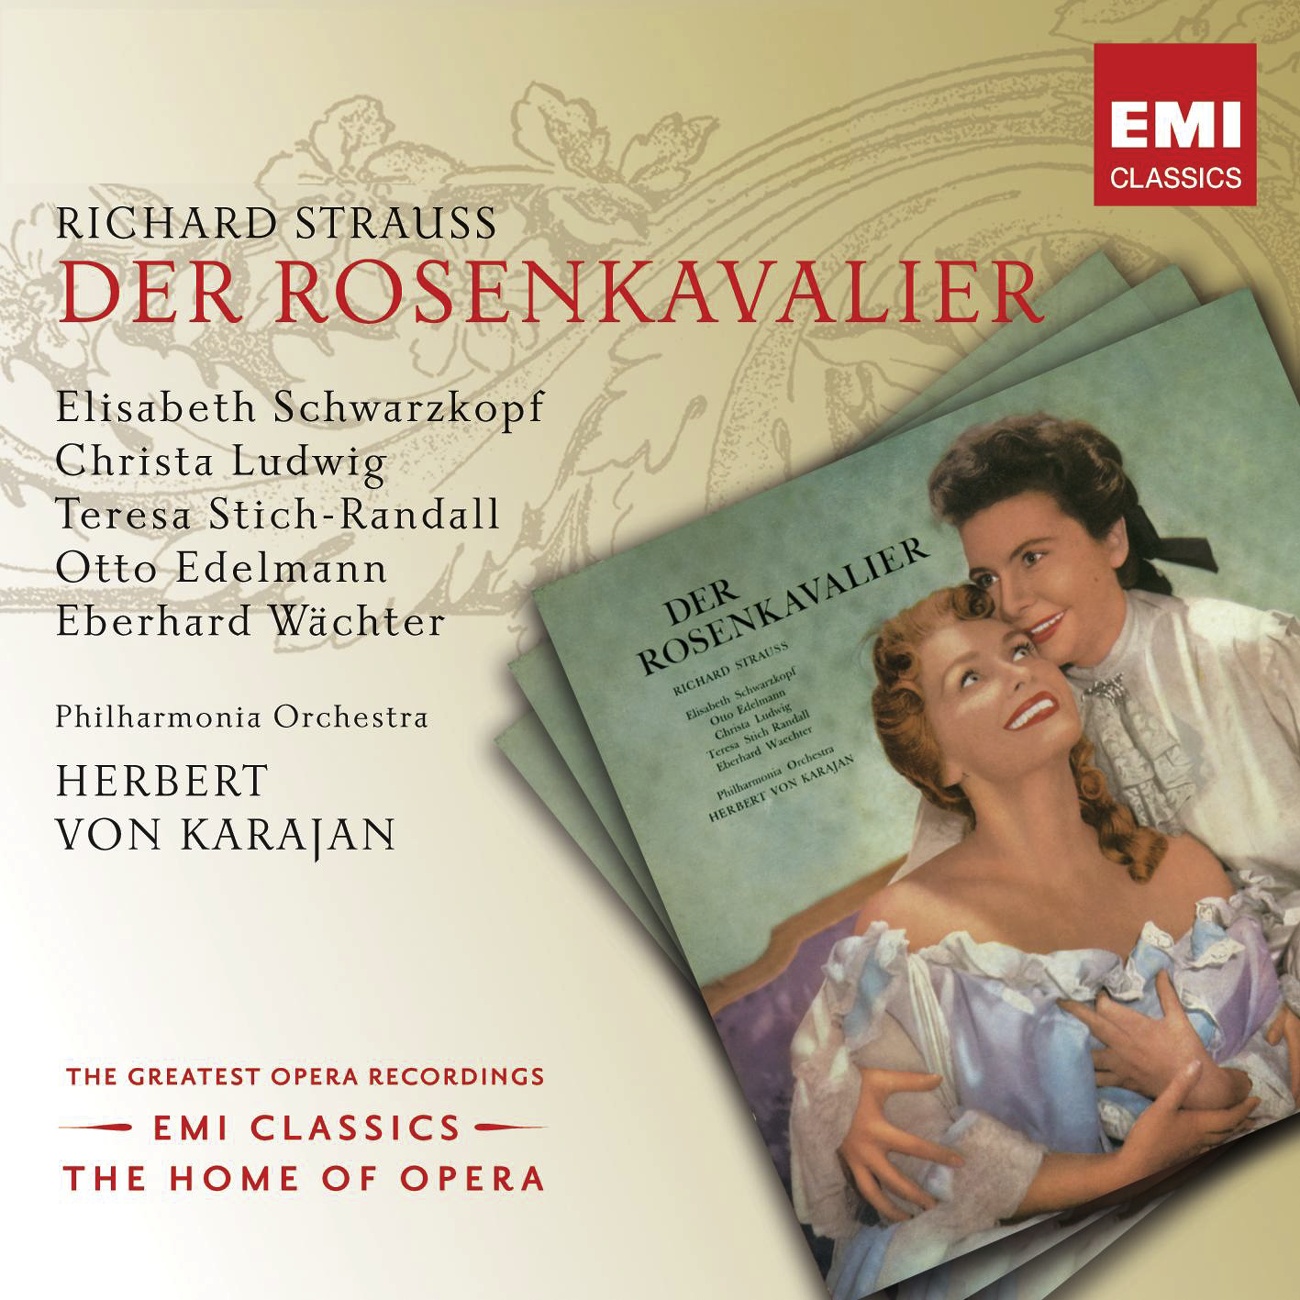 Der Rosenkavalier (2001 Digital Remaster), Act I: Di rigori armato il seno (Ein Sänger)